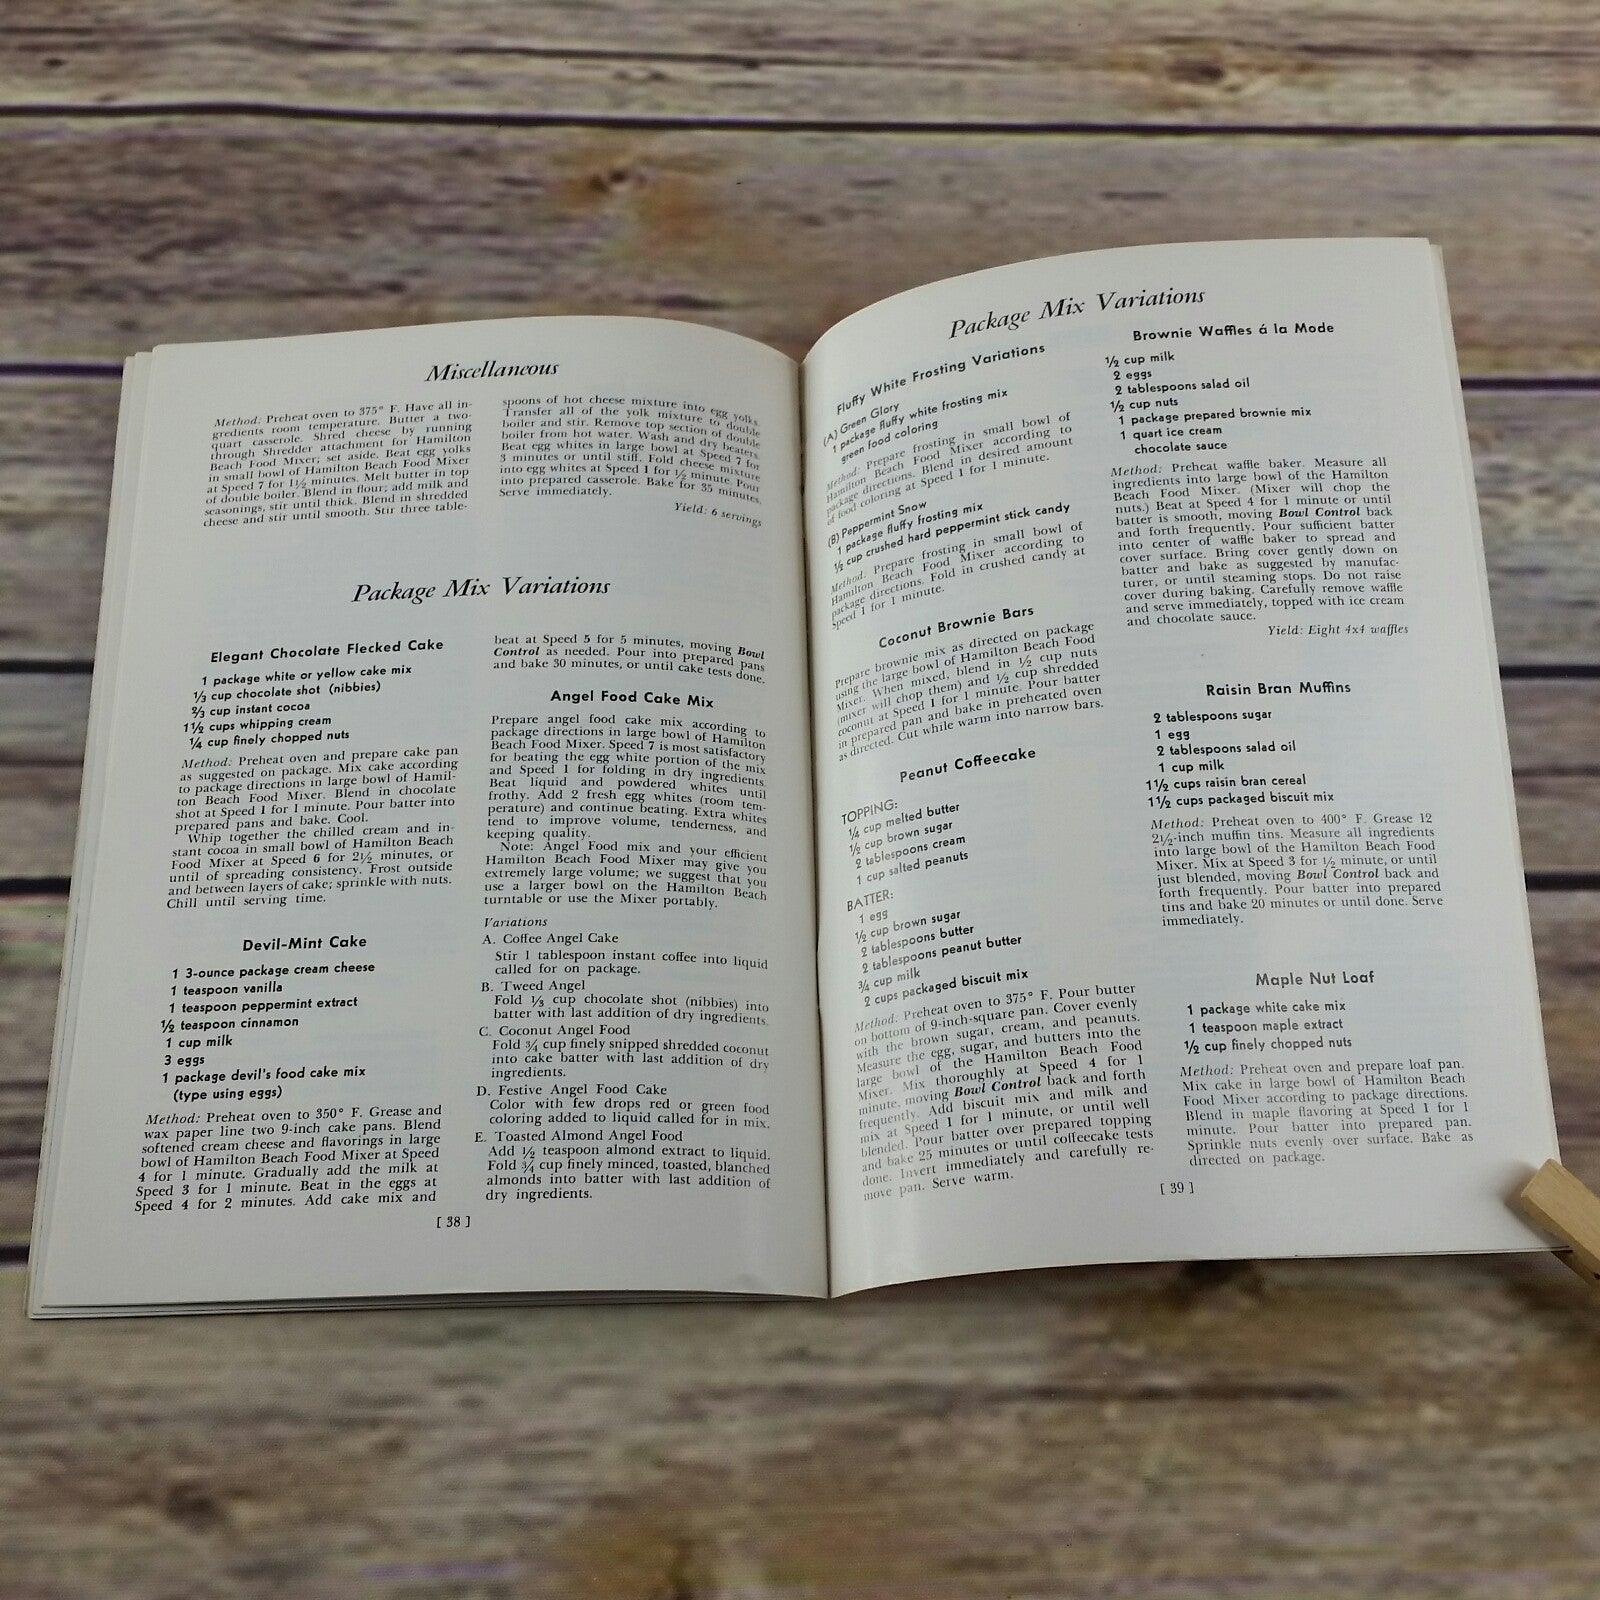 Vintage Hamilton Beach Model K Food Mixer Recipes and Instructions Manual 1950s 1960s Paperback Booklet Cookbook - At Grandma's Table